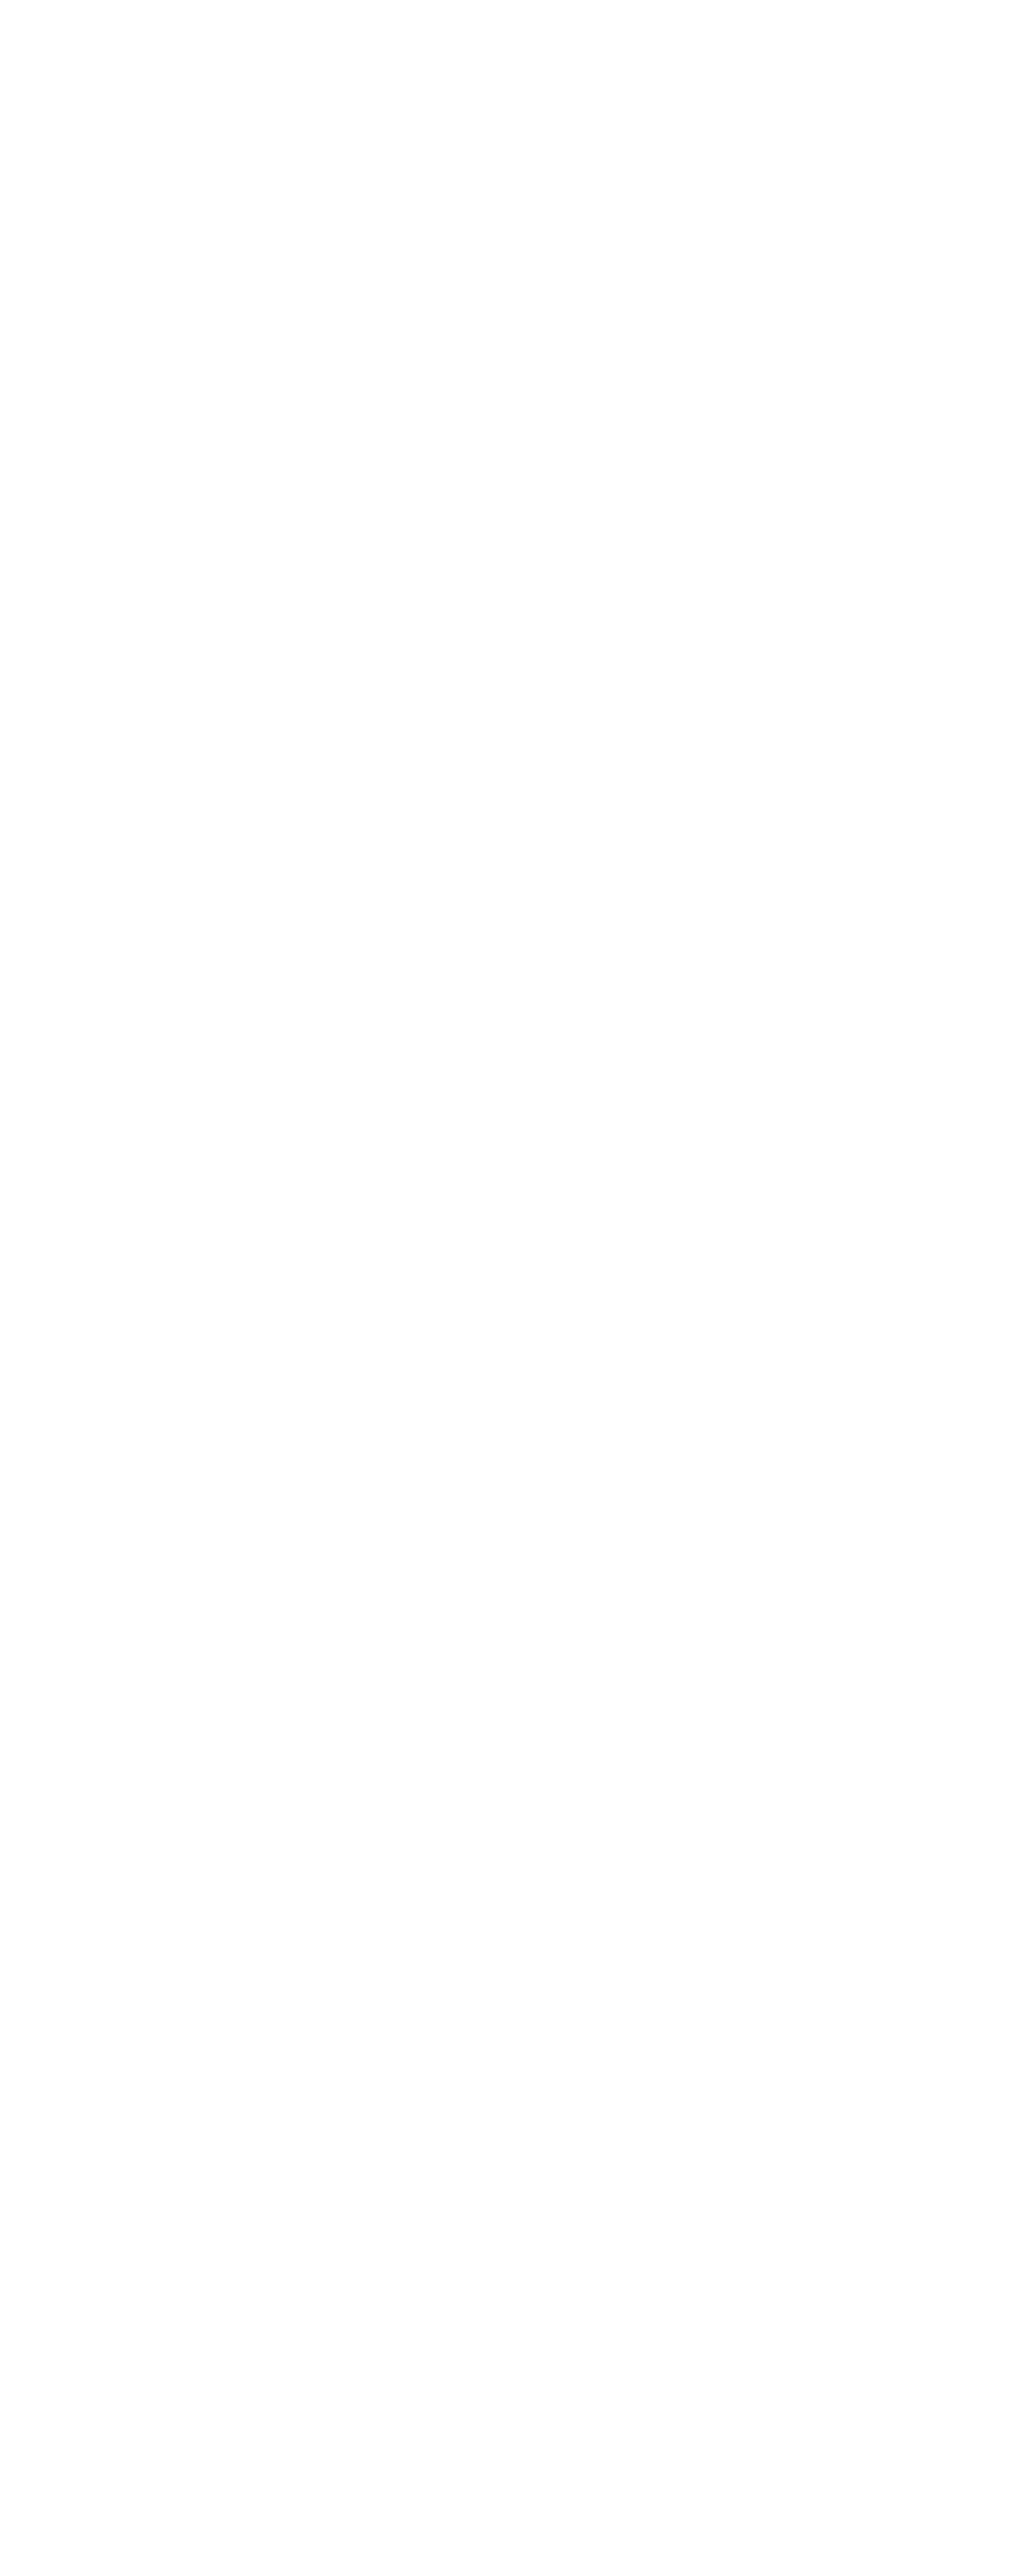 Infographic CERN